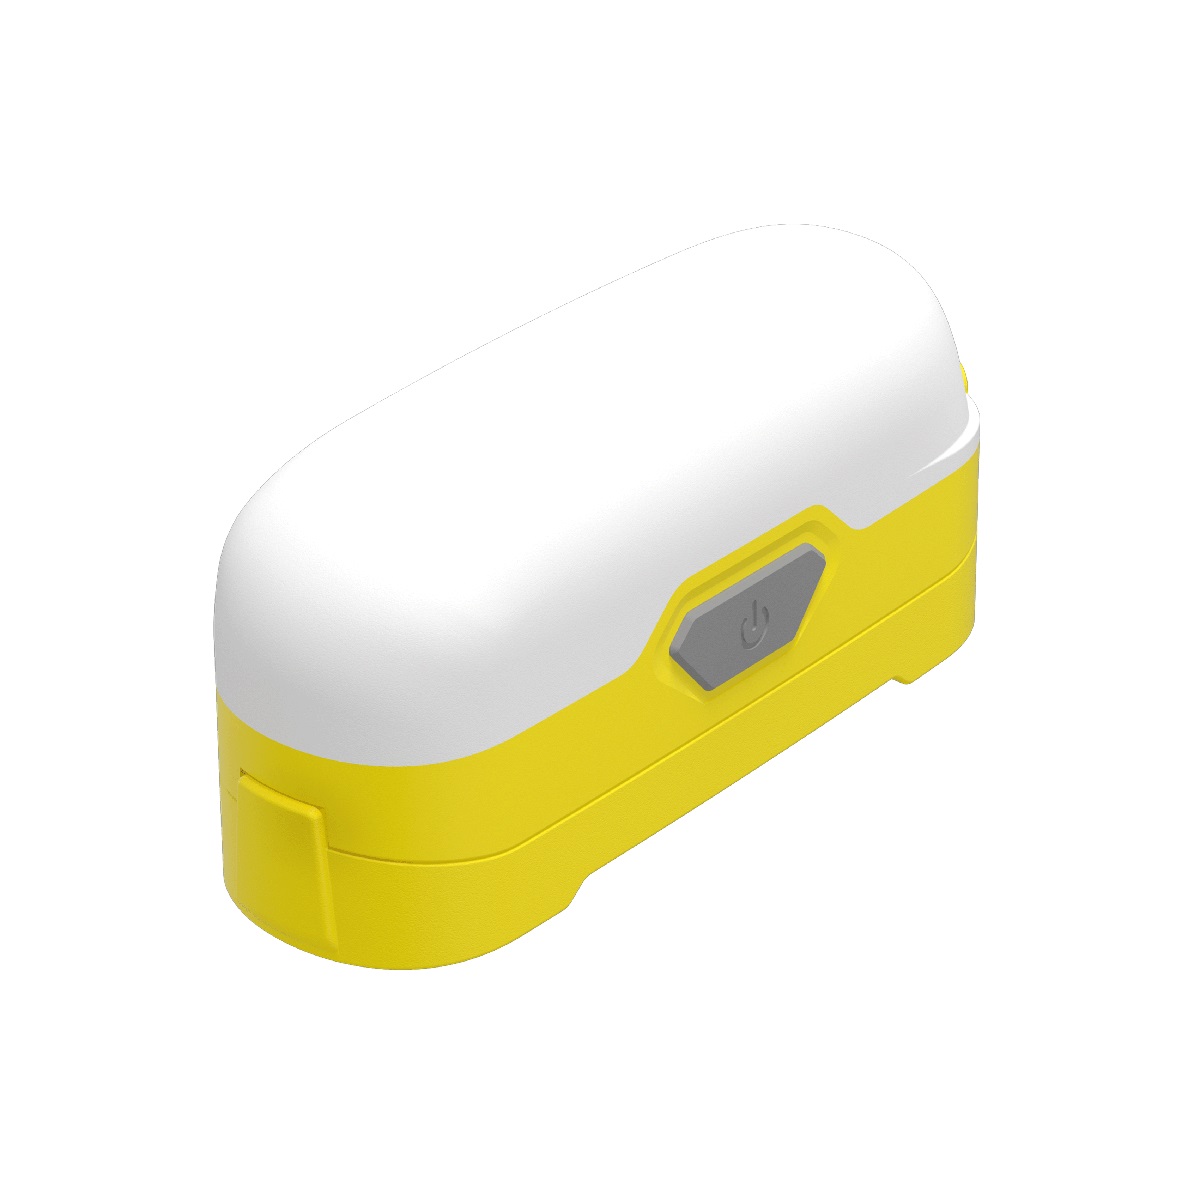 Nitecore Sysmax Industrial 9004719 205 Lumen Compact Lightweight Camping Lantern - Sand Yellow